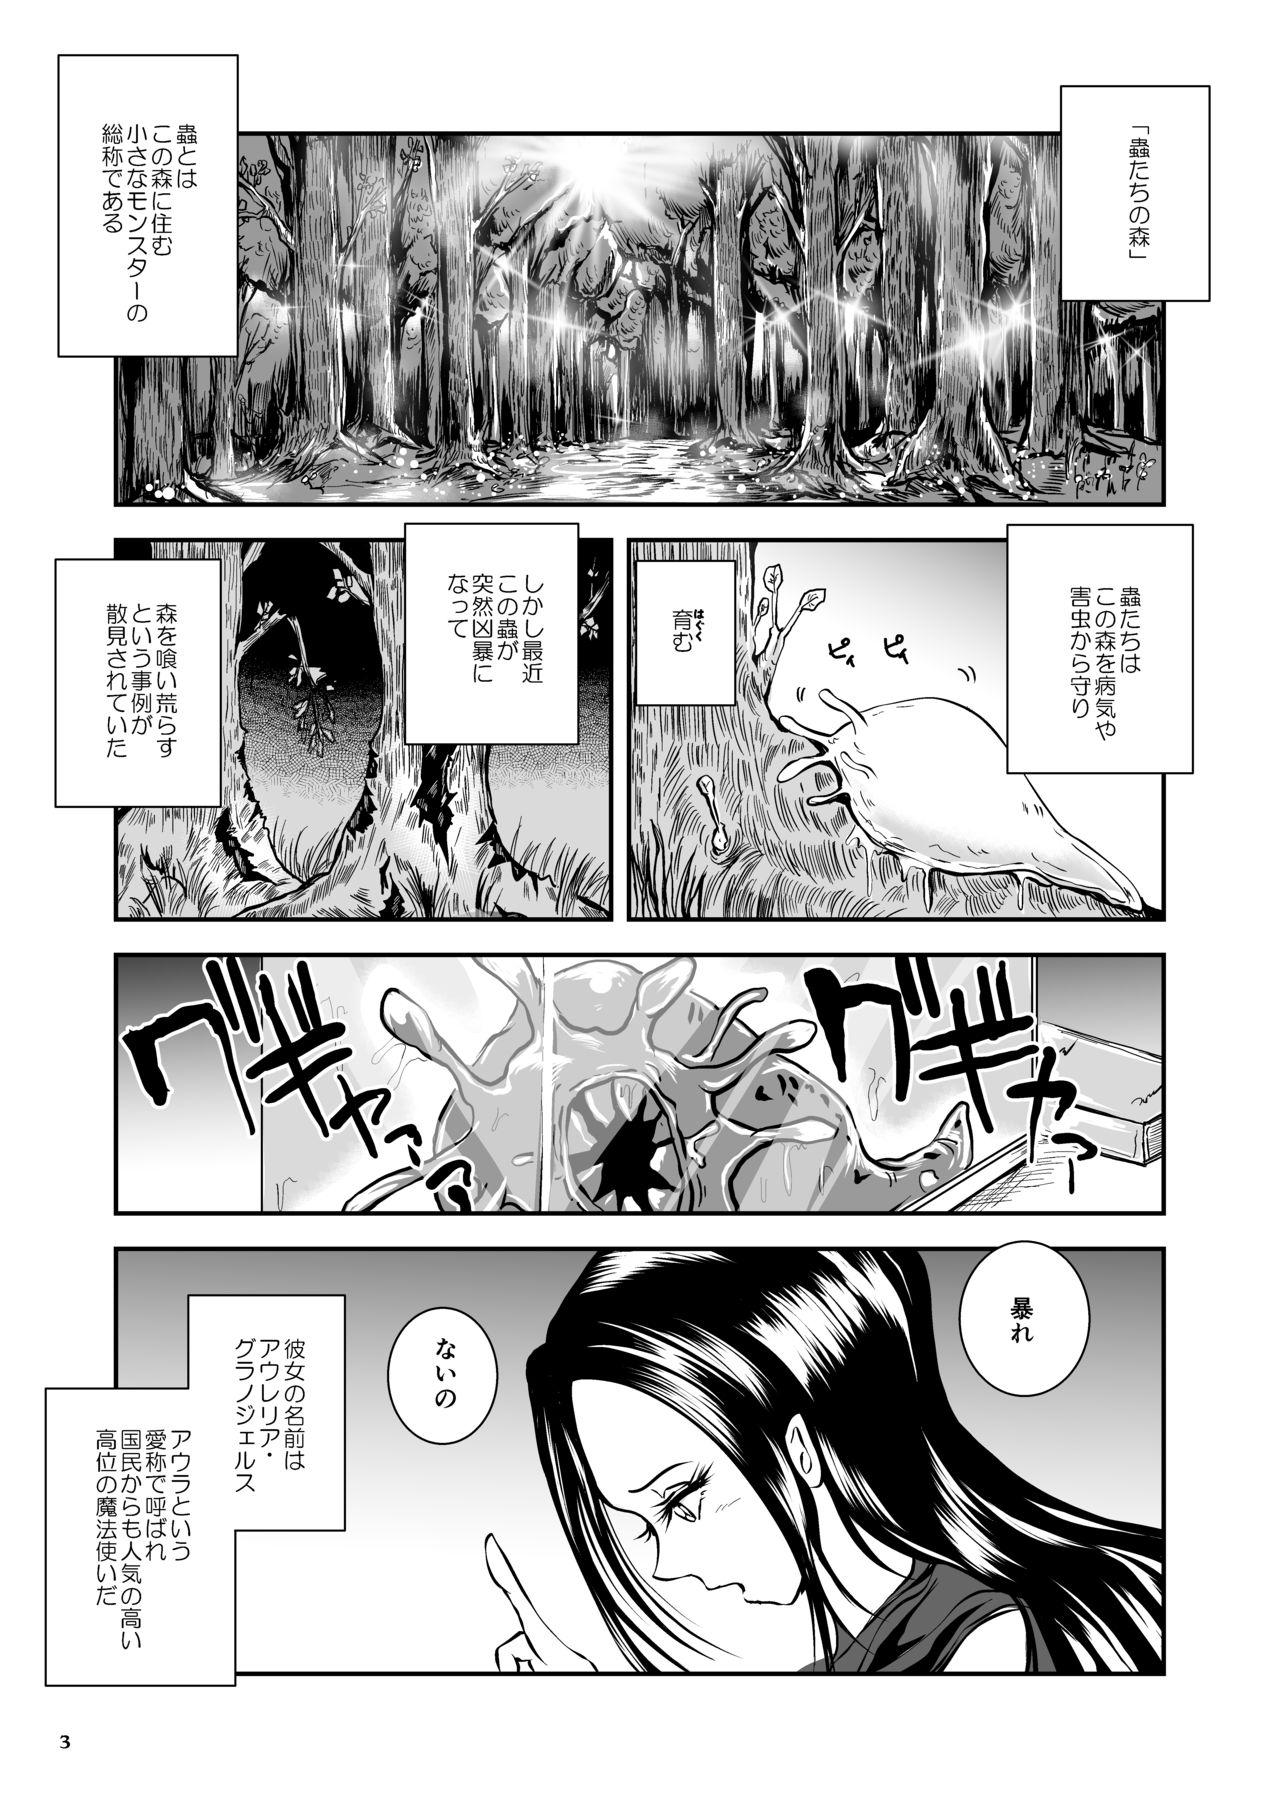 No Condom Oonamekuji to Kurokami no Mahoutsukai - Parasitized Giant Slugs V.S. Sorceress of the Black Hair as Aura Celebrities - Page 3